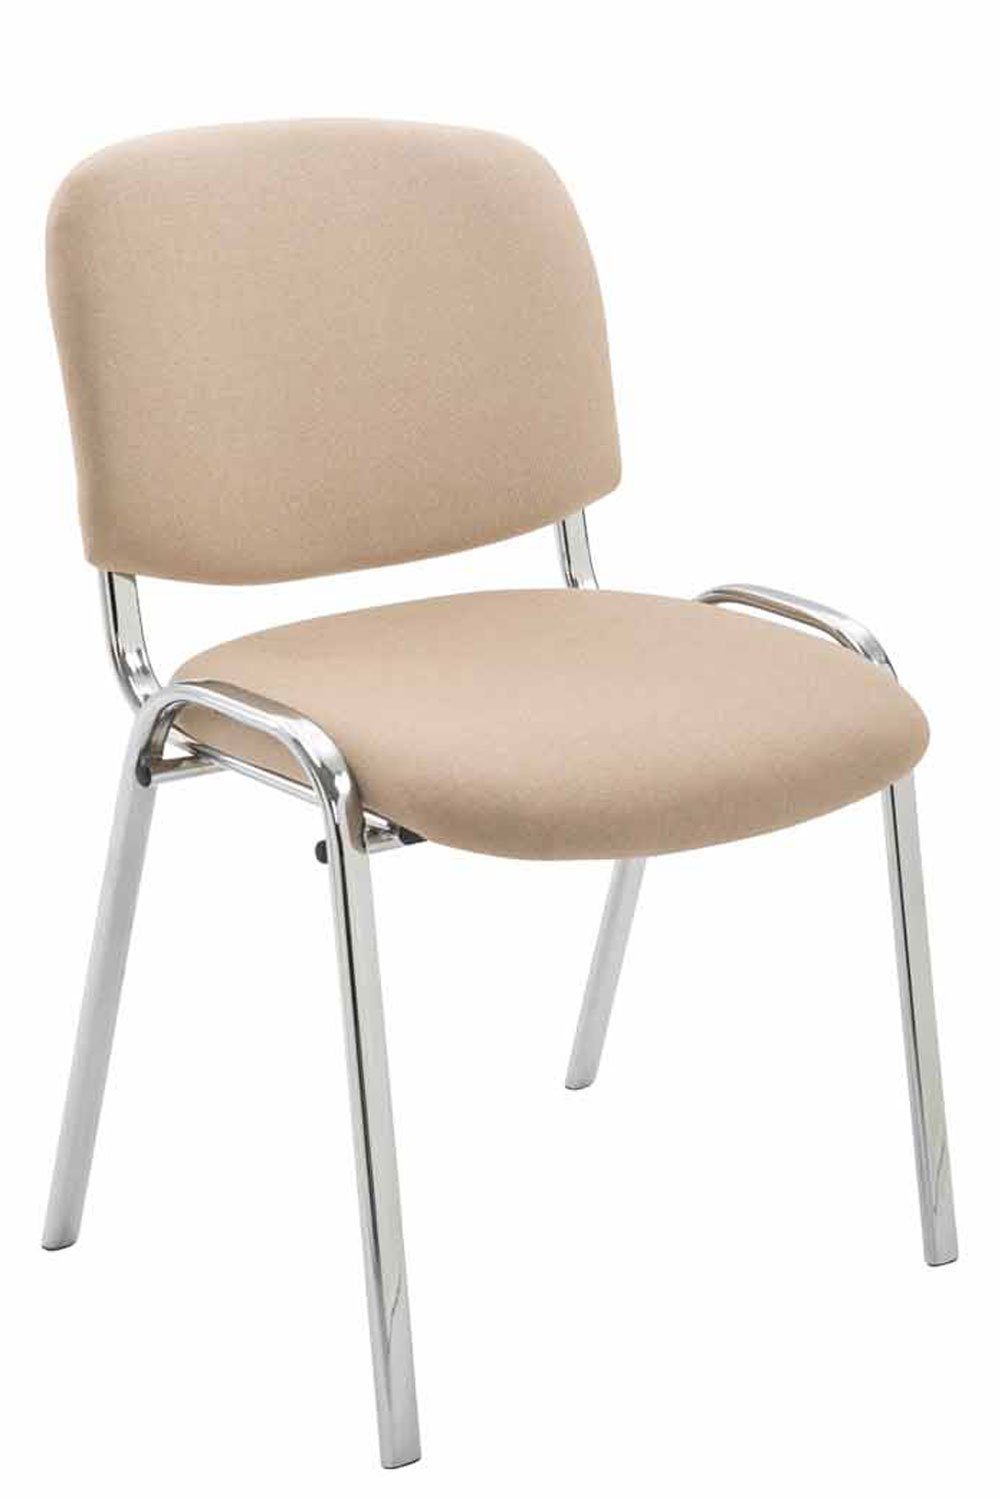 hochwertiger - TPFLiving - (Besprechungsstuhl Gestell: Warteraumstuhl Metall - Sitzfläche: Messestuhl), chrom creme mit Stoff Besucherstuhl Konferenzstuhl Polsterung - Keen